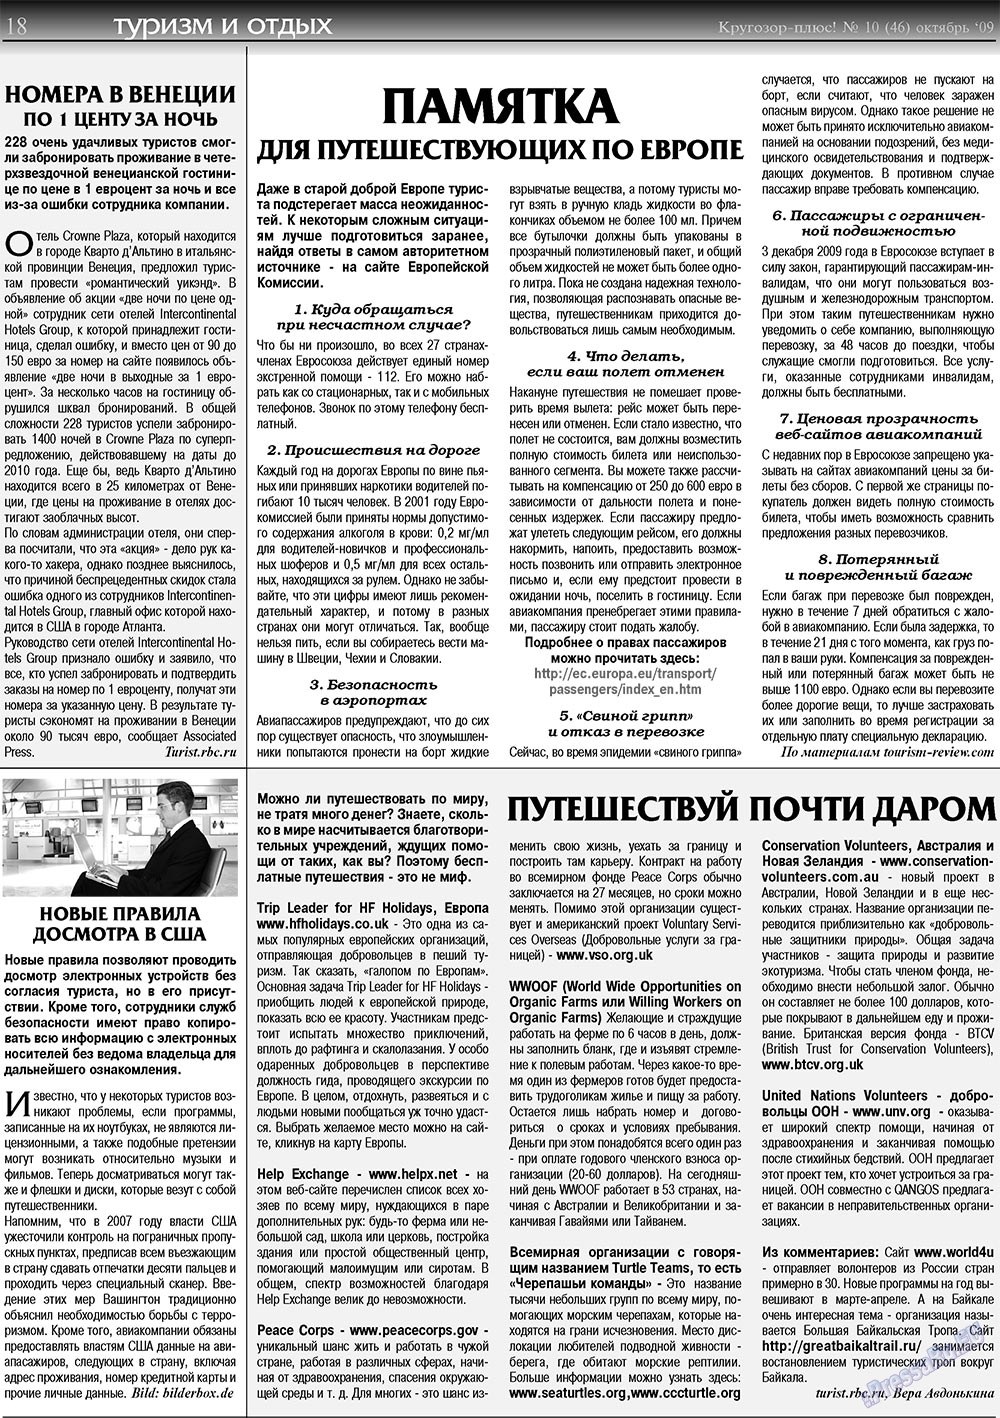 Кругозор плюс! (газета). 2009 год, номер 10, стр. 18